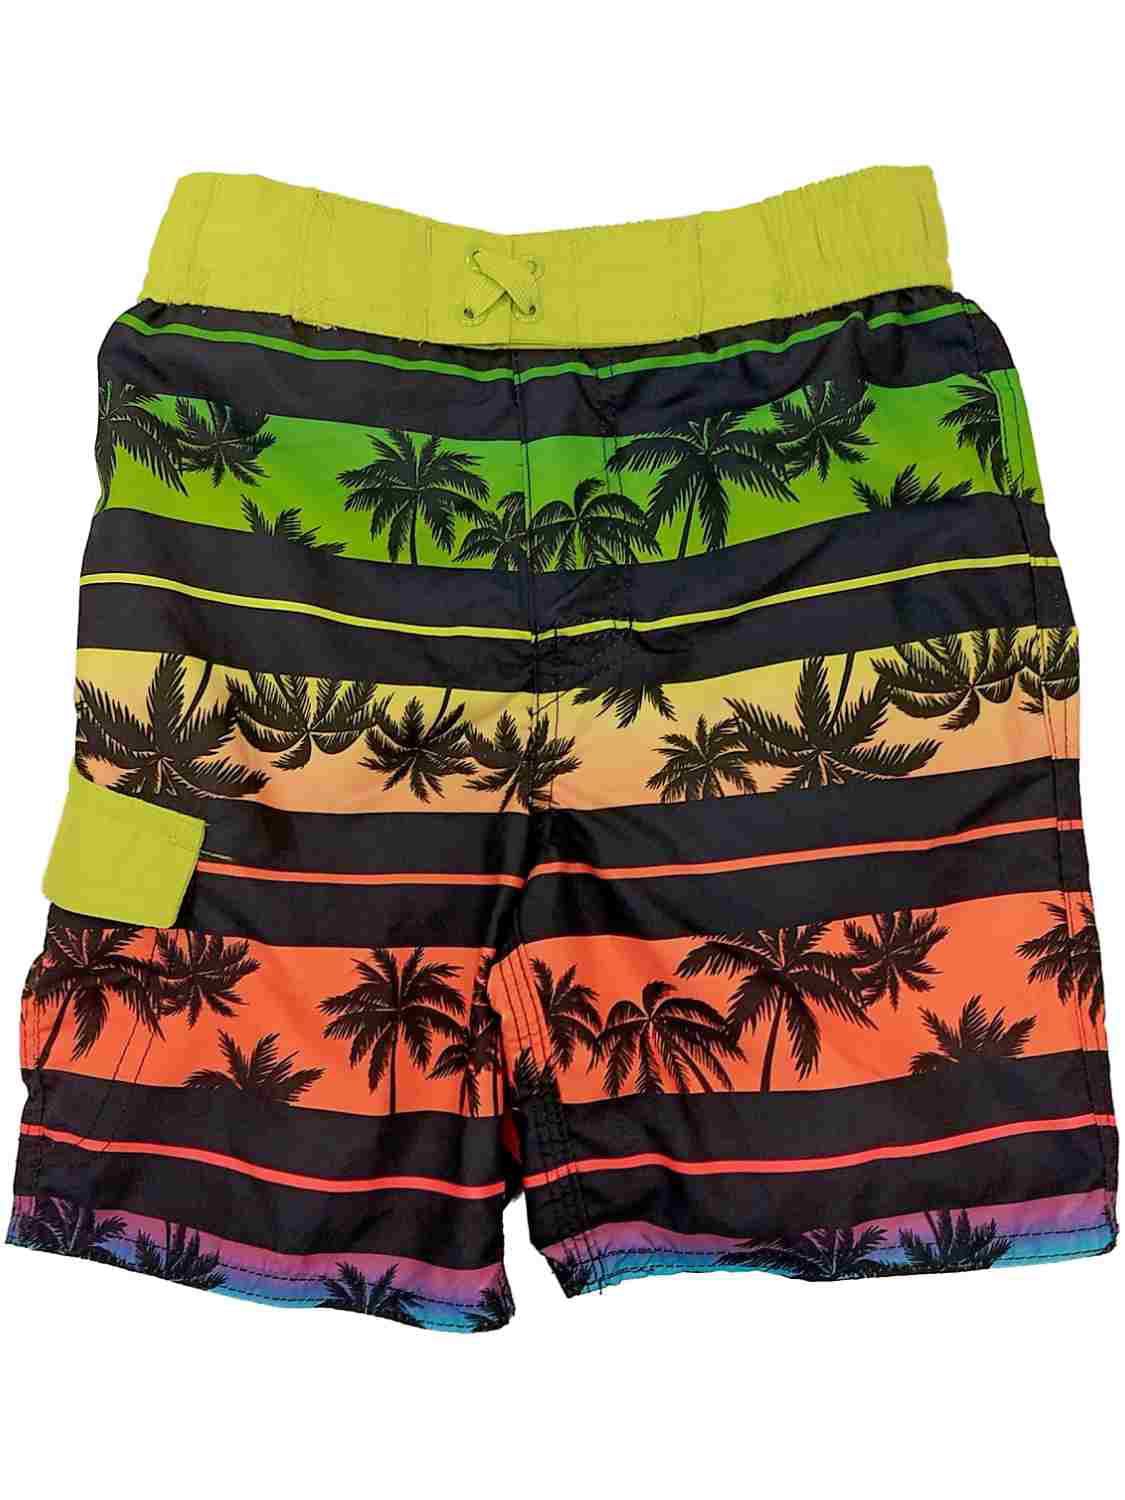 FullBo Green Yellow Cactus Plants Little Boys Short Swim Trunks Quick Dry Beach Shorts